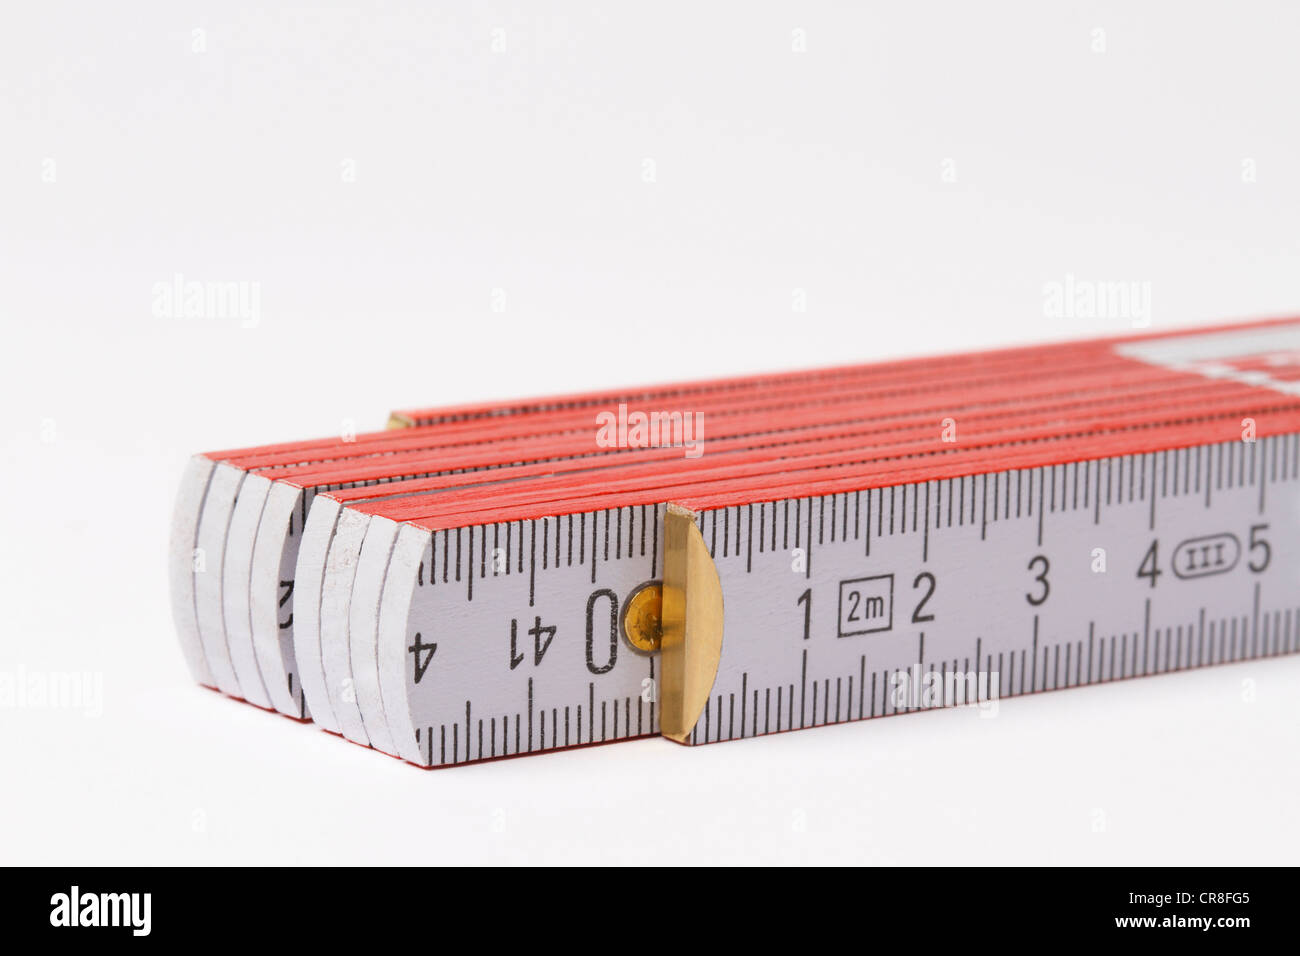 Foldable wooden ruler Stock Photo